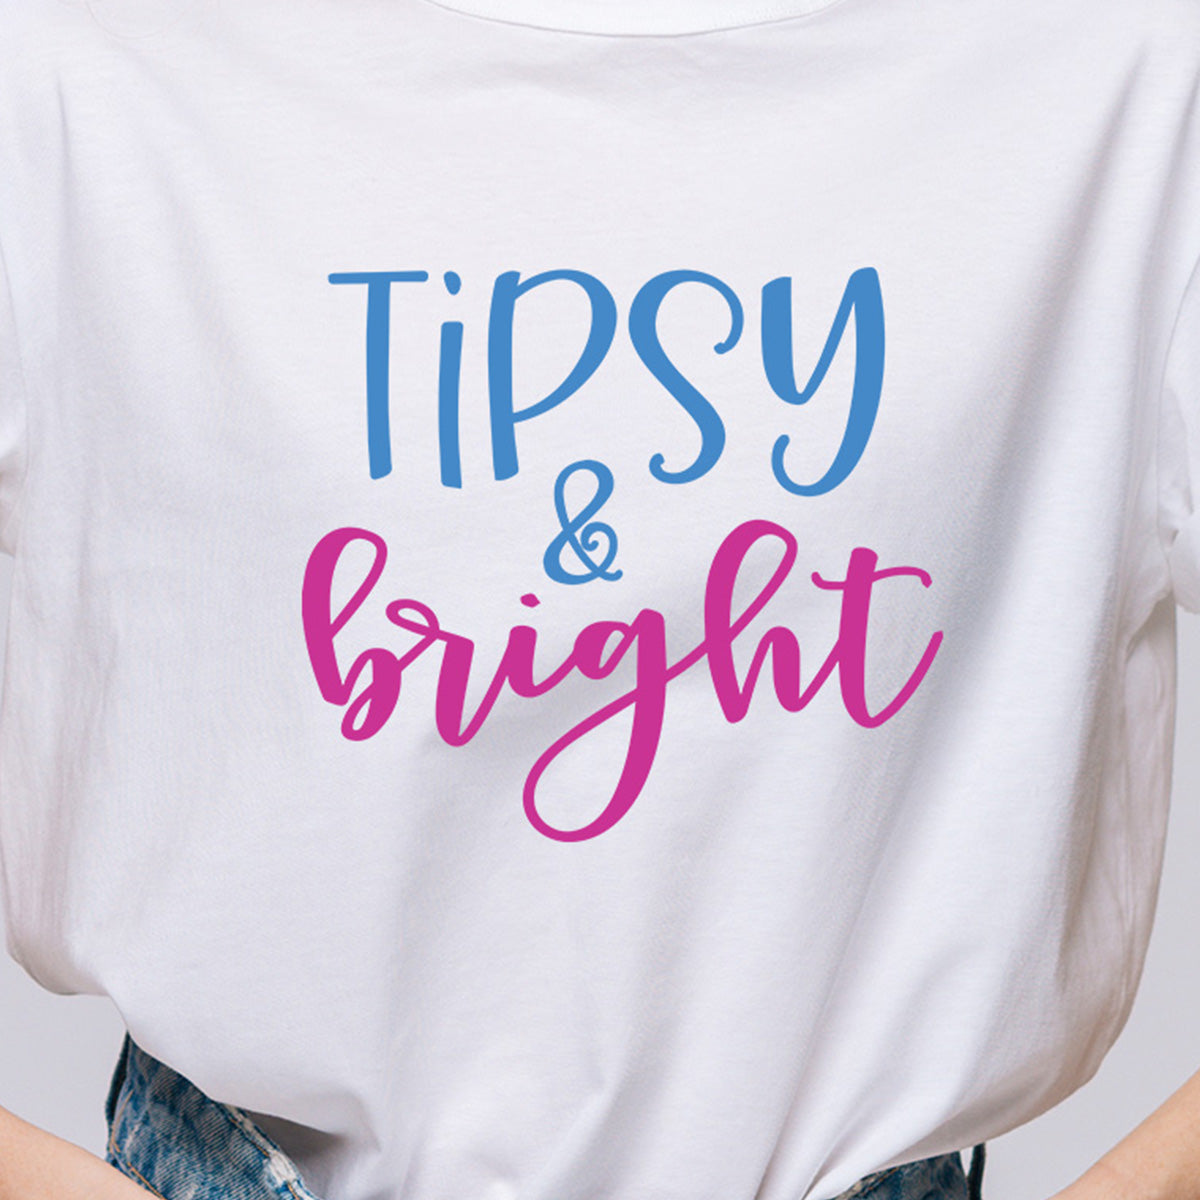 Tipsy & Bright - Printed Cotton T- Shirt - White